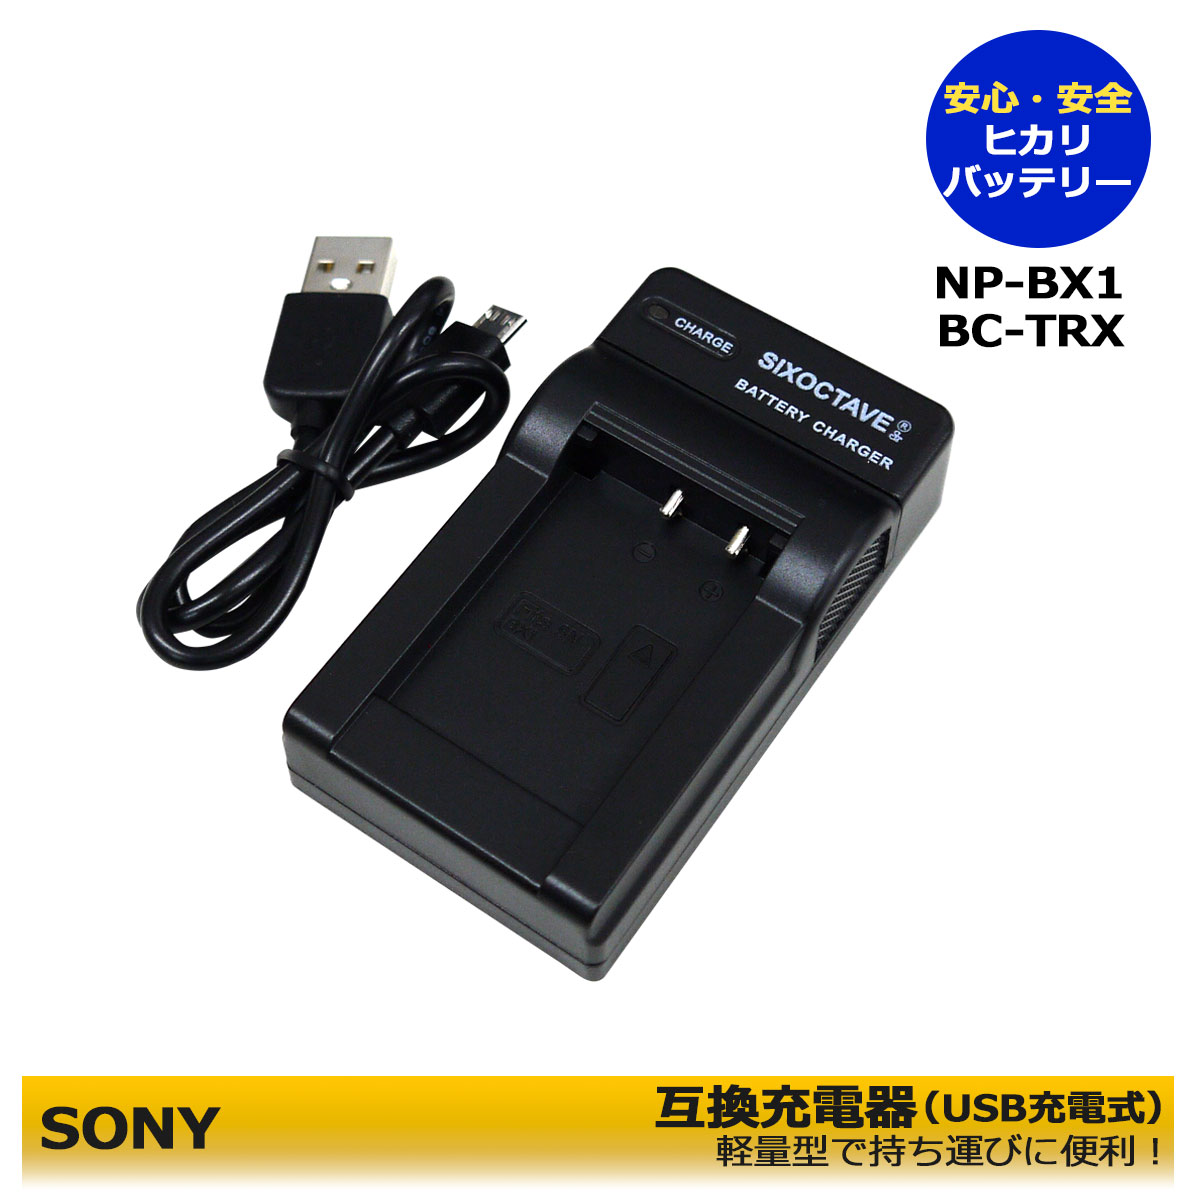 NP-BX1 SONY 【送料無料】 互換充電器 USB充電式 HDR-AS15 / HDR-AS30V / HDR-AS30VR / HDR-AS50 / HDR-AS50R / HDR-AS100V / HDR-AS100VR / HDR-AS200V / HDR-AS300 / HDR-AS300R FDR-X シリ…